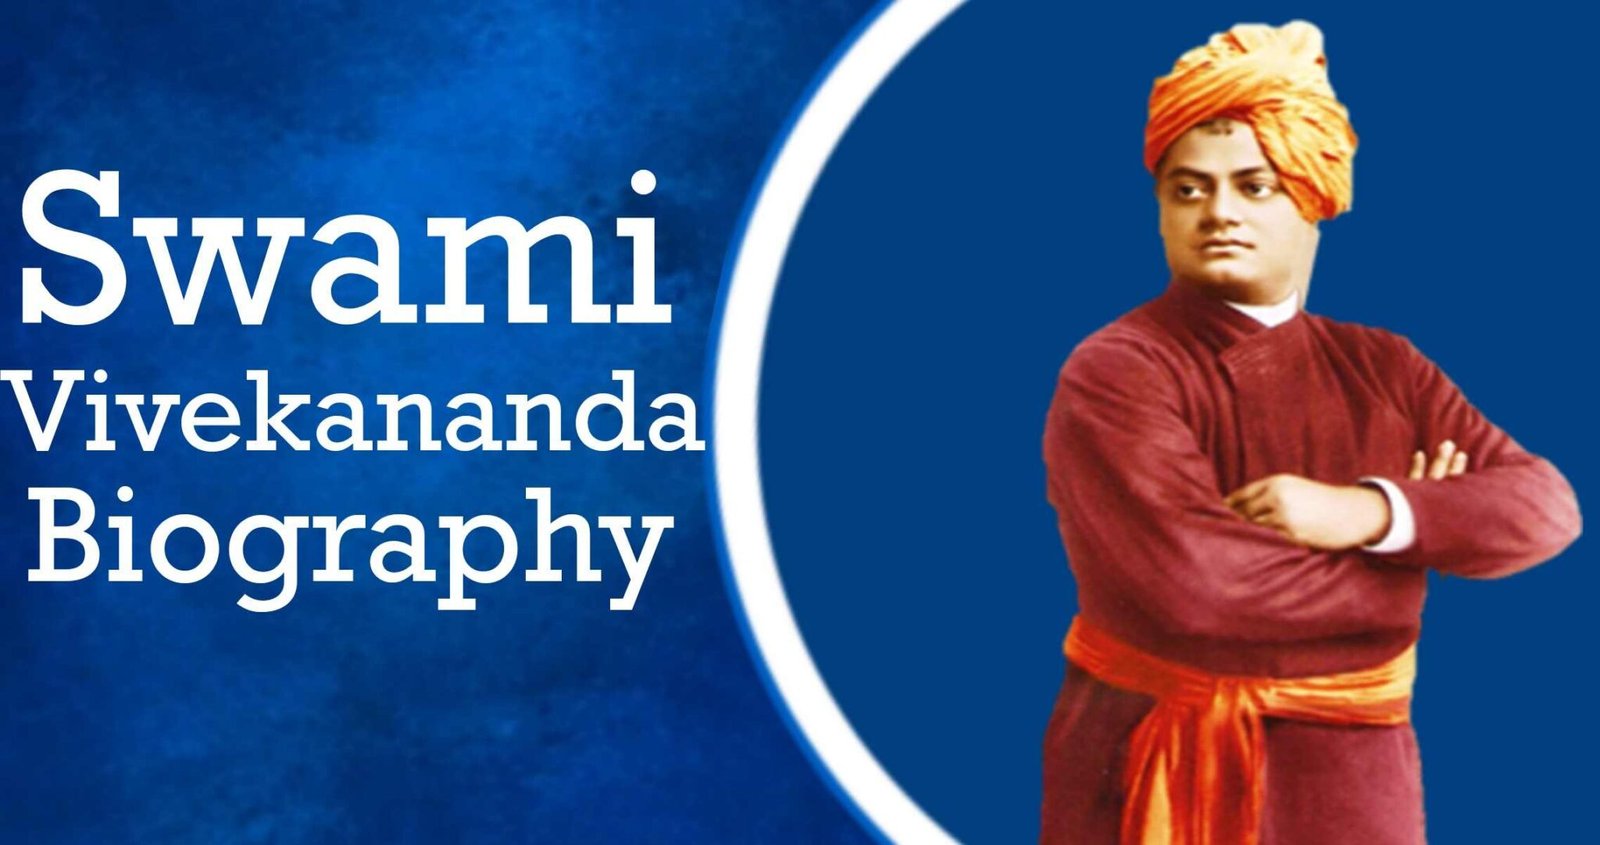 auto biography of swami vivekananda in hindi